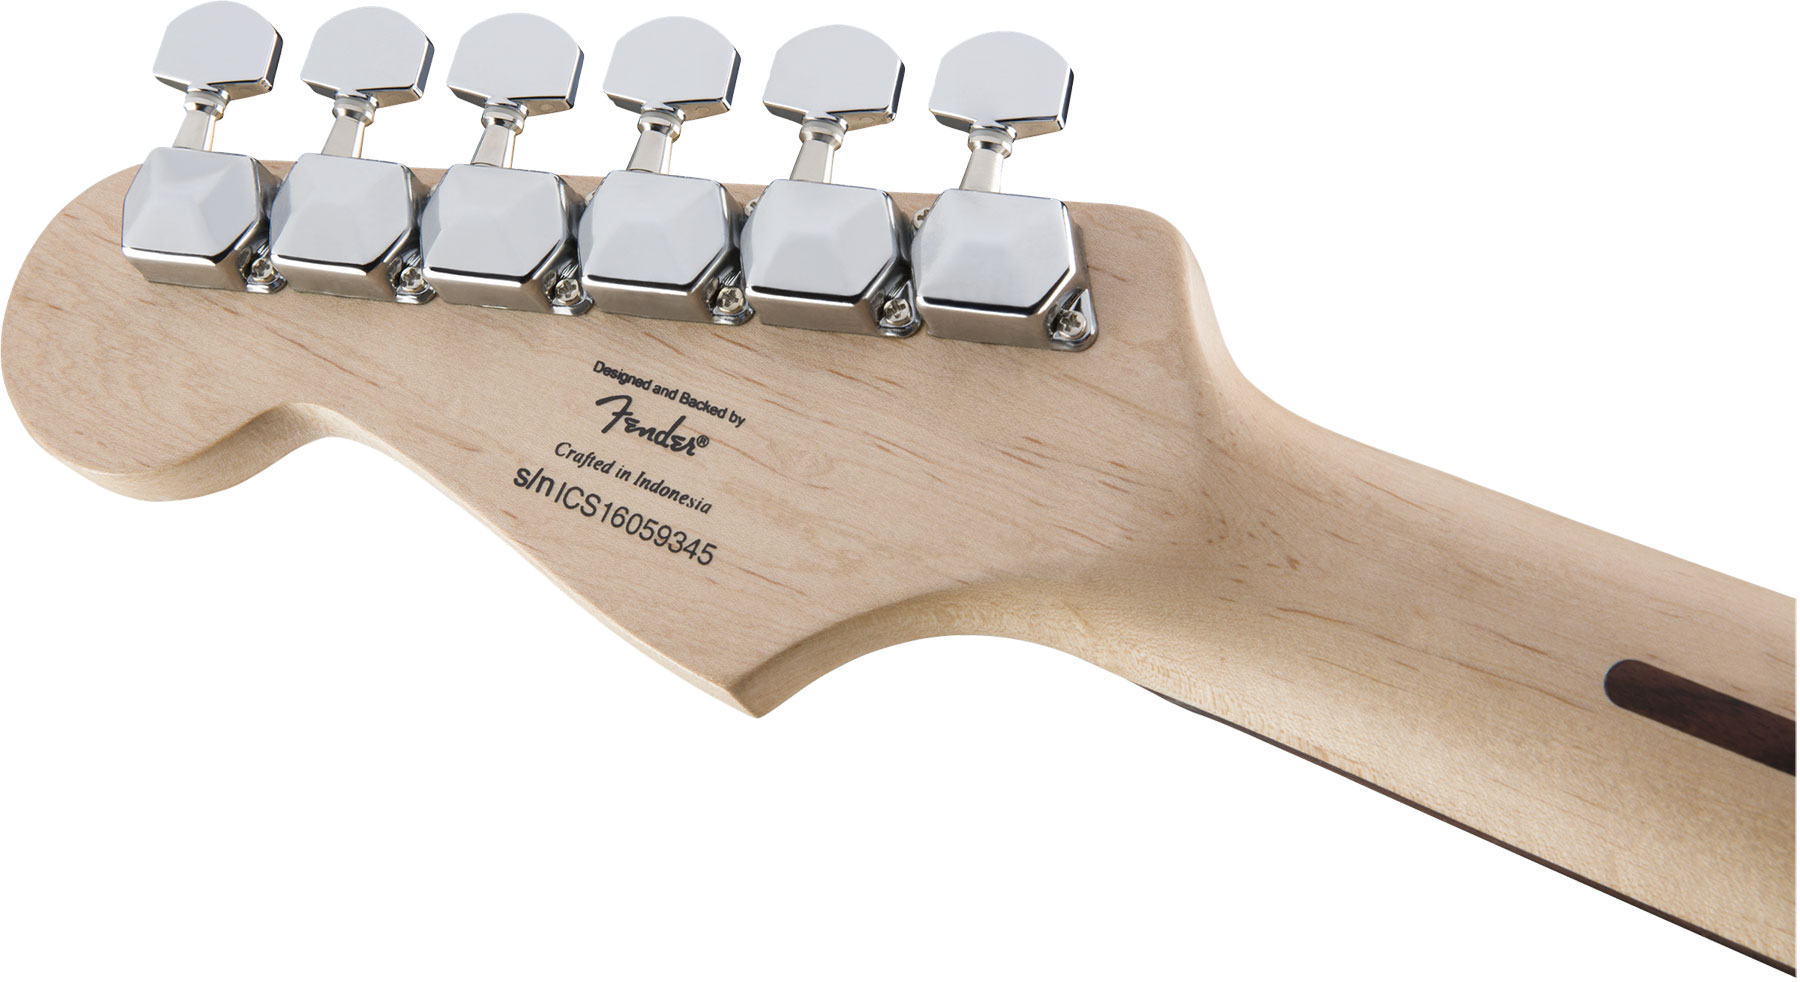 Squier Bullet Stratocaster With Tremolo Sss Lau - Brown Sunburst - Str shape electric guitar - Variation 2